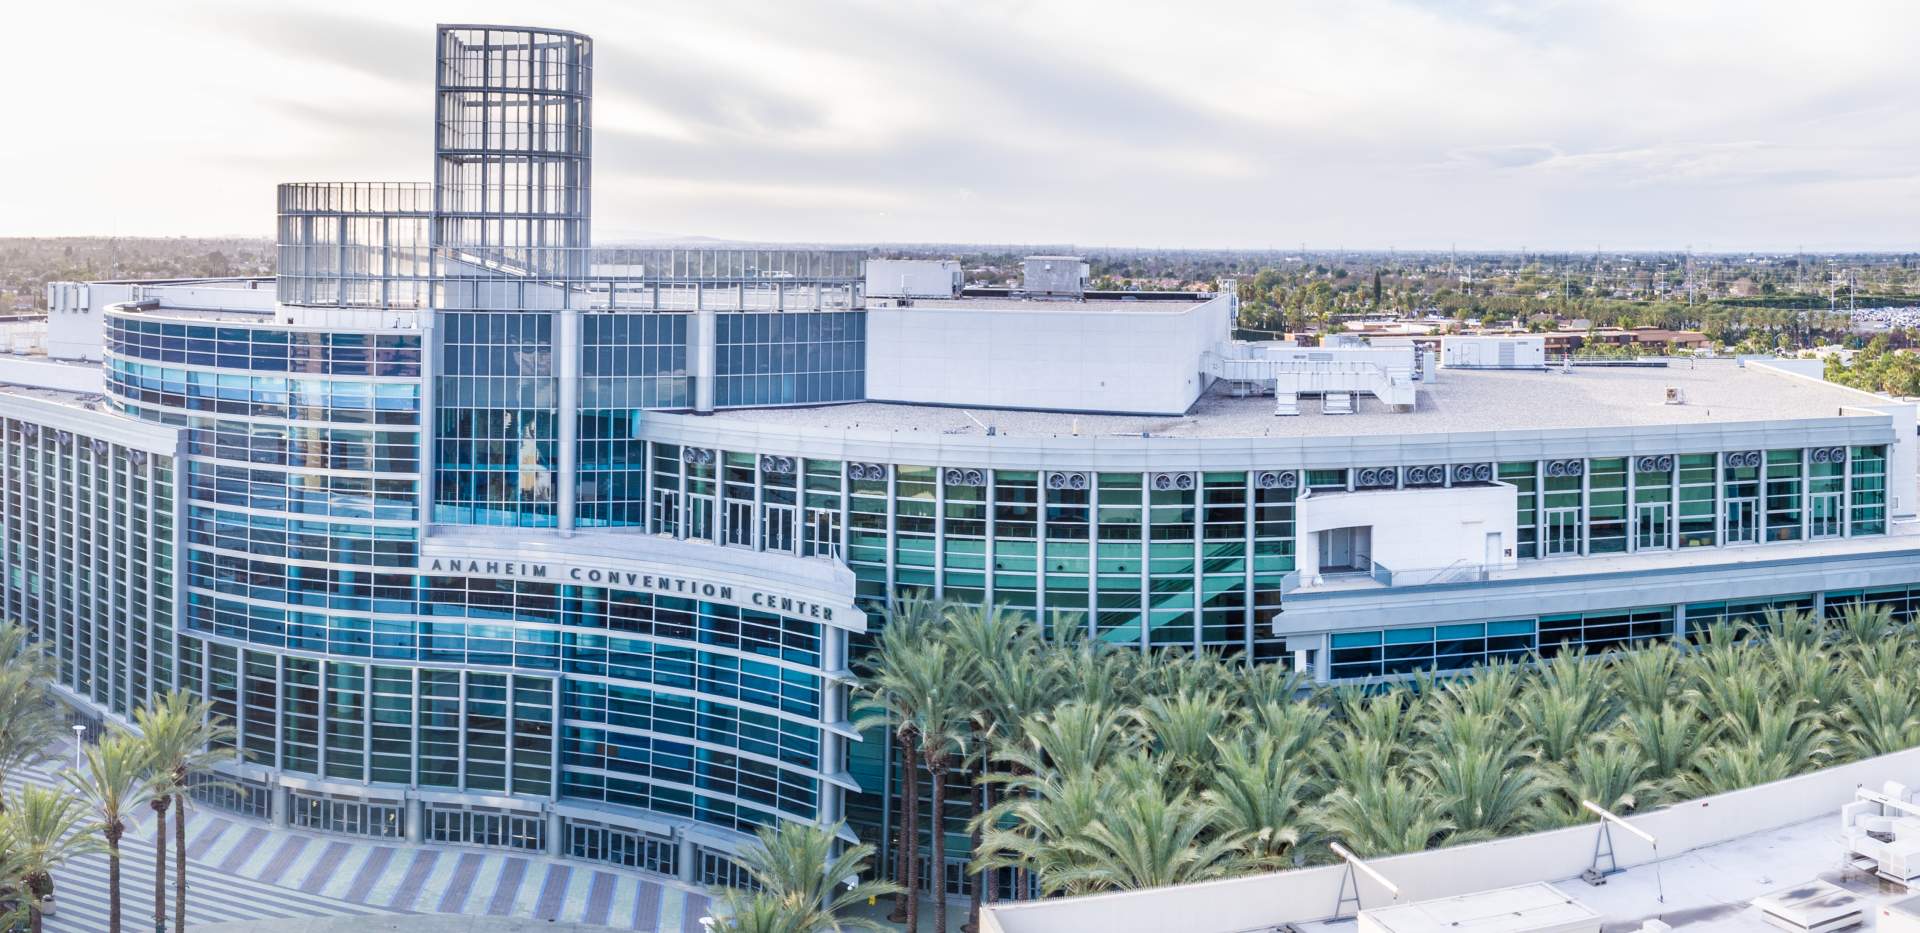 The Anaheim Convention Center Explore Metrolink